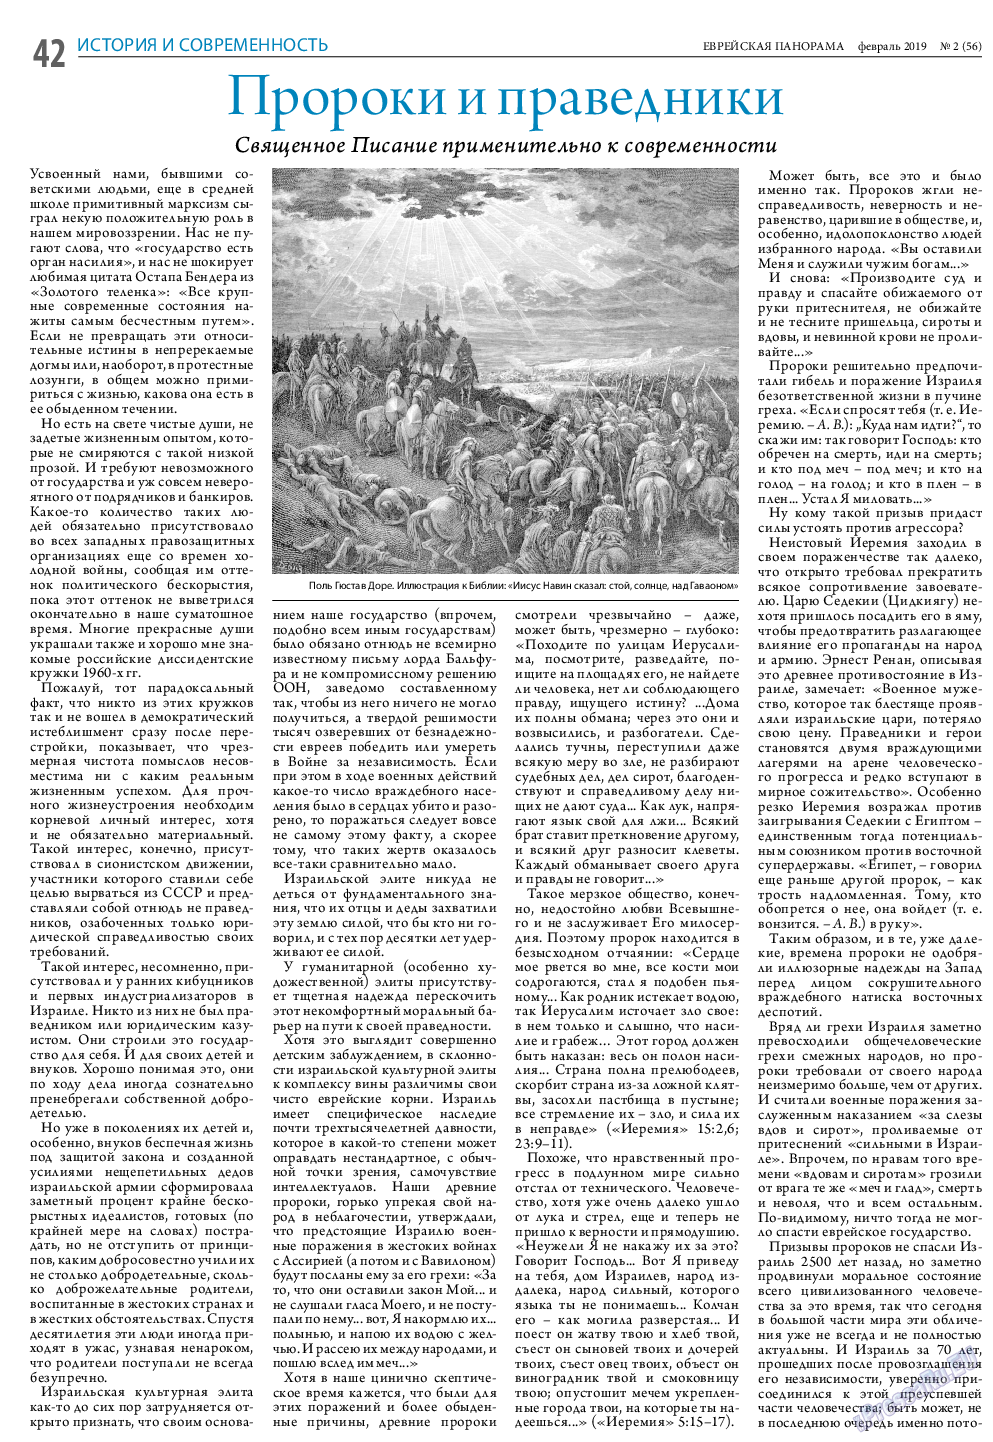 Еврейская панорама, газета. 2019 №2 стр.42